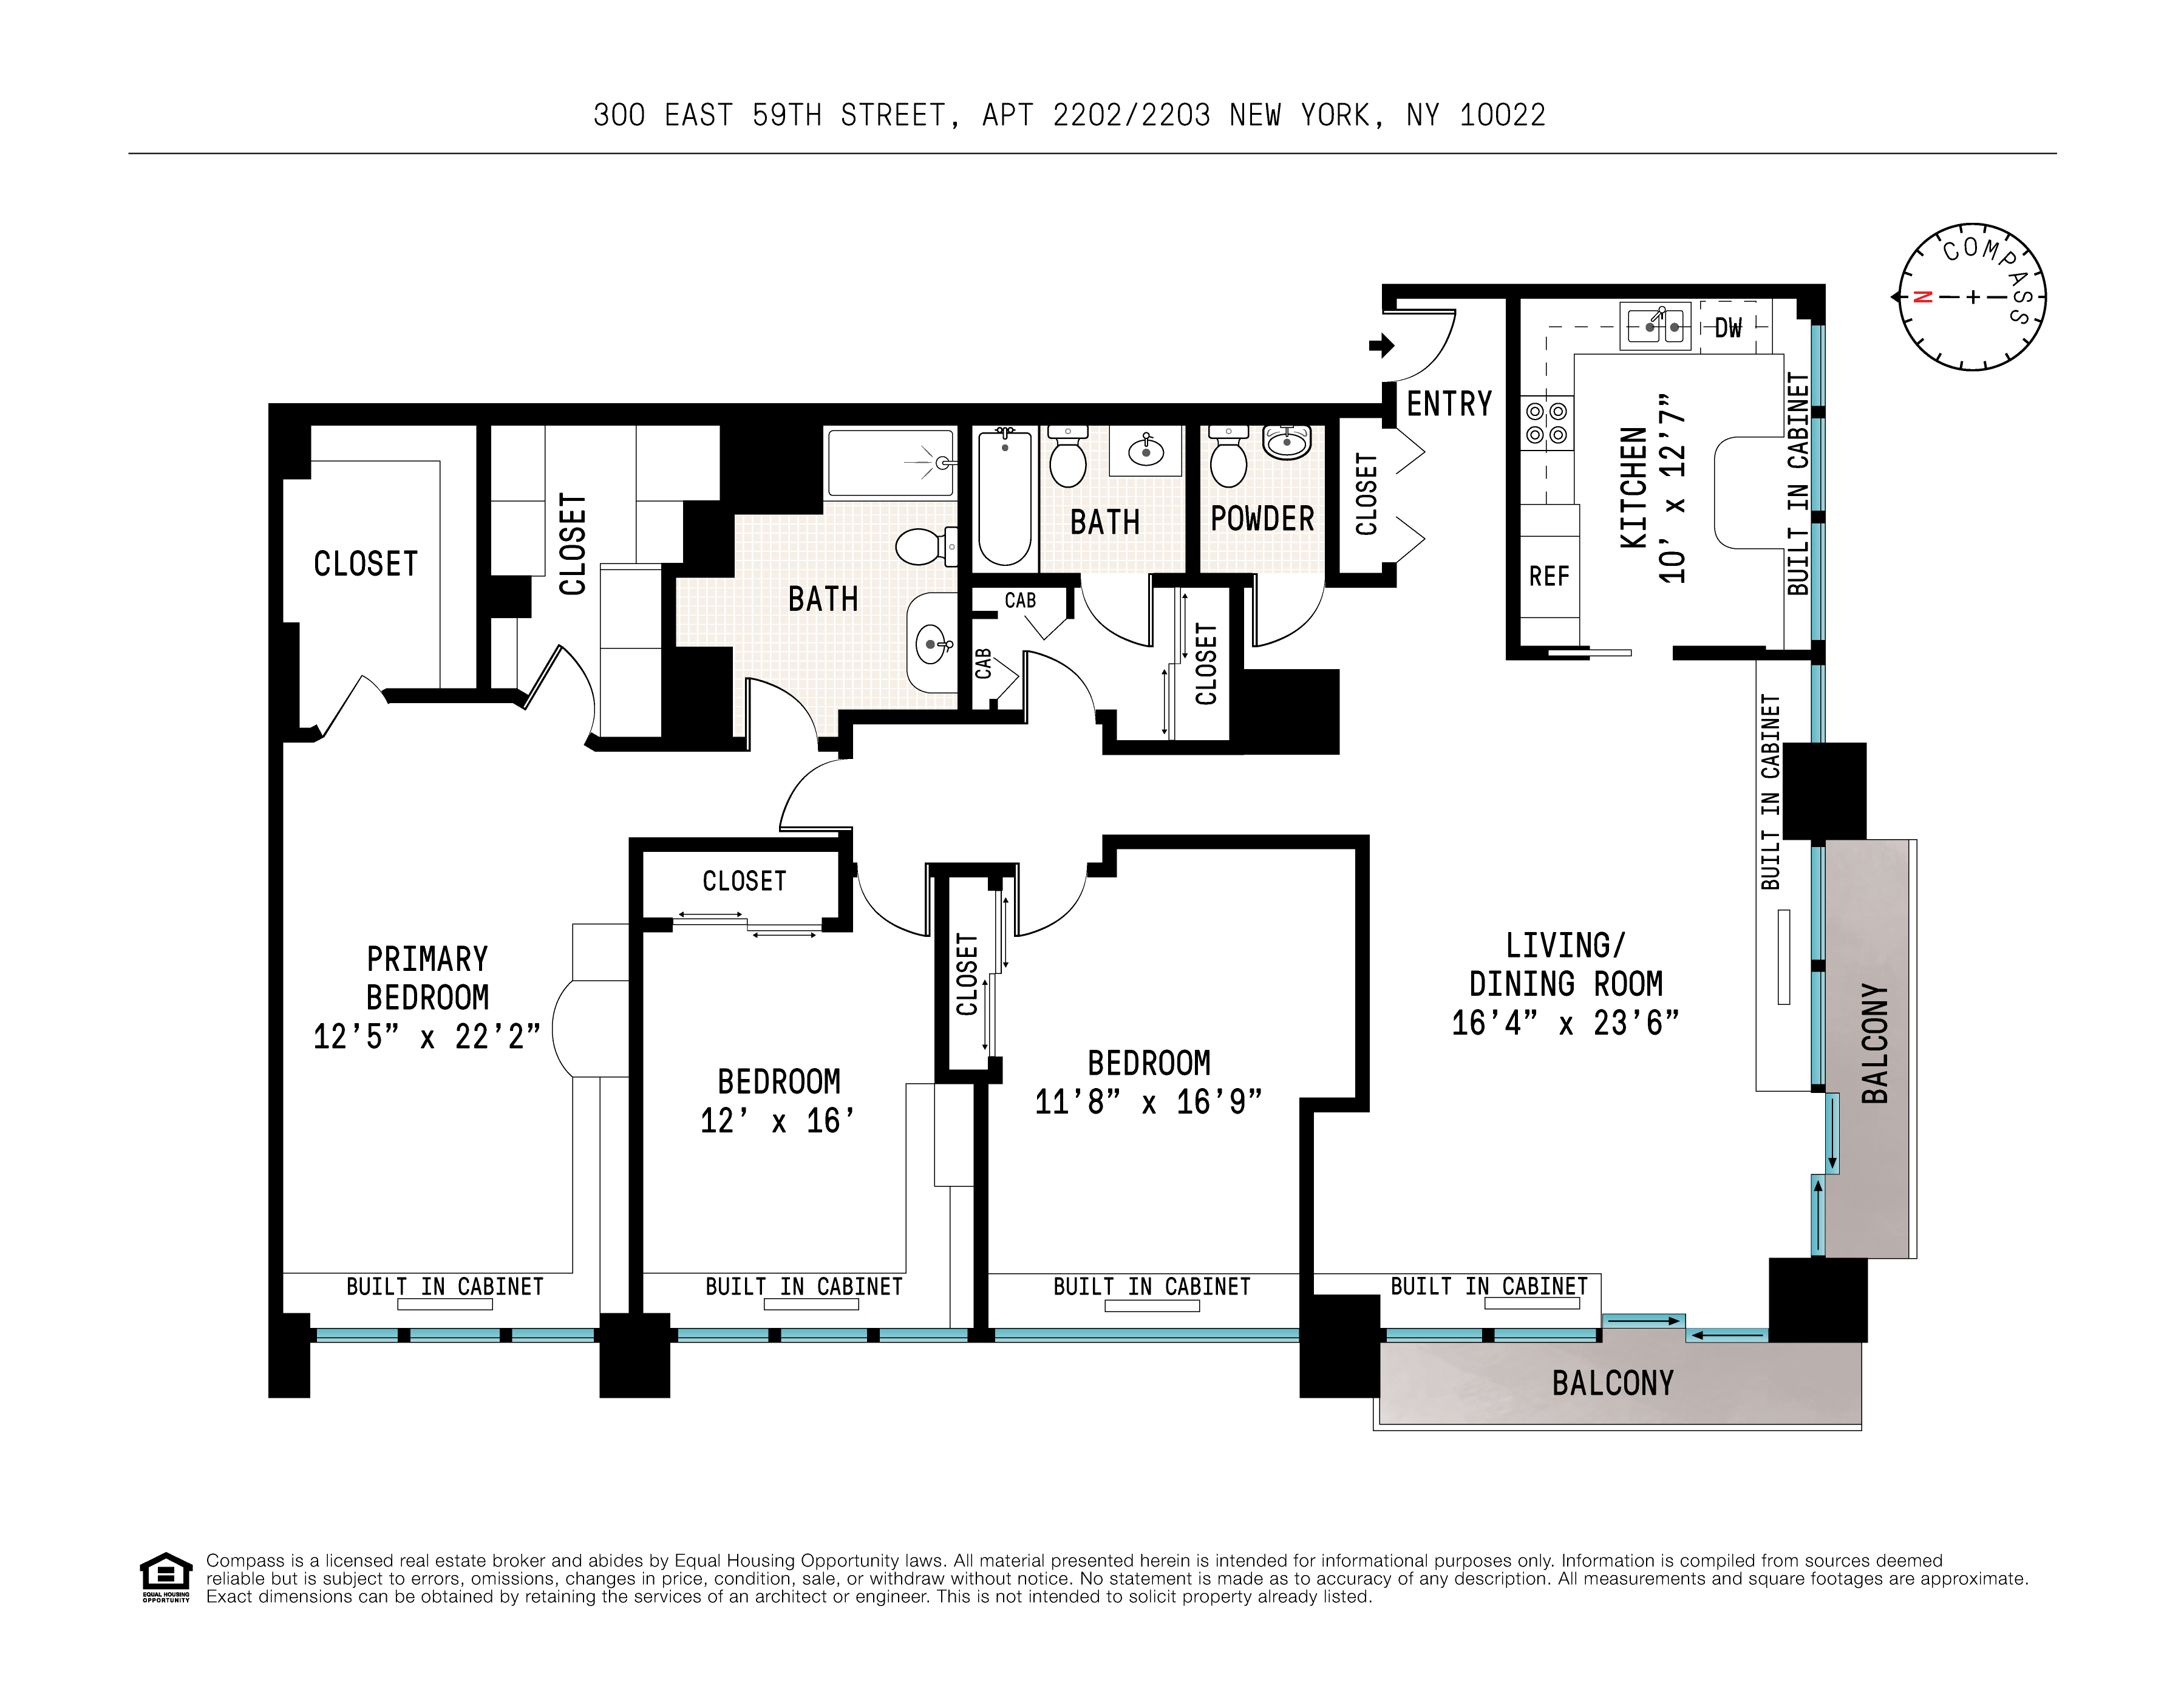 Floorplan for 300 East 59th Street, 2202/2203